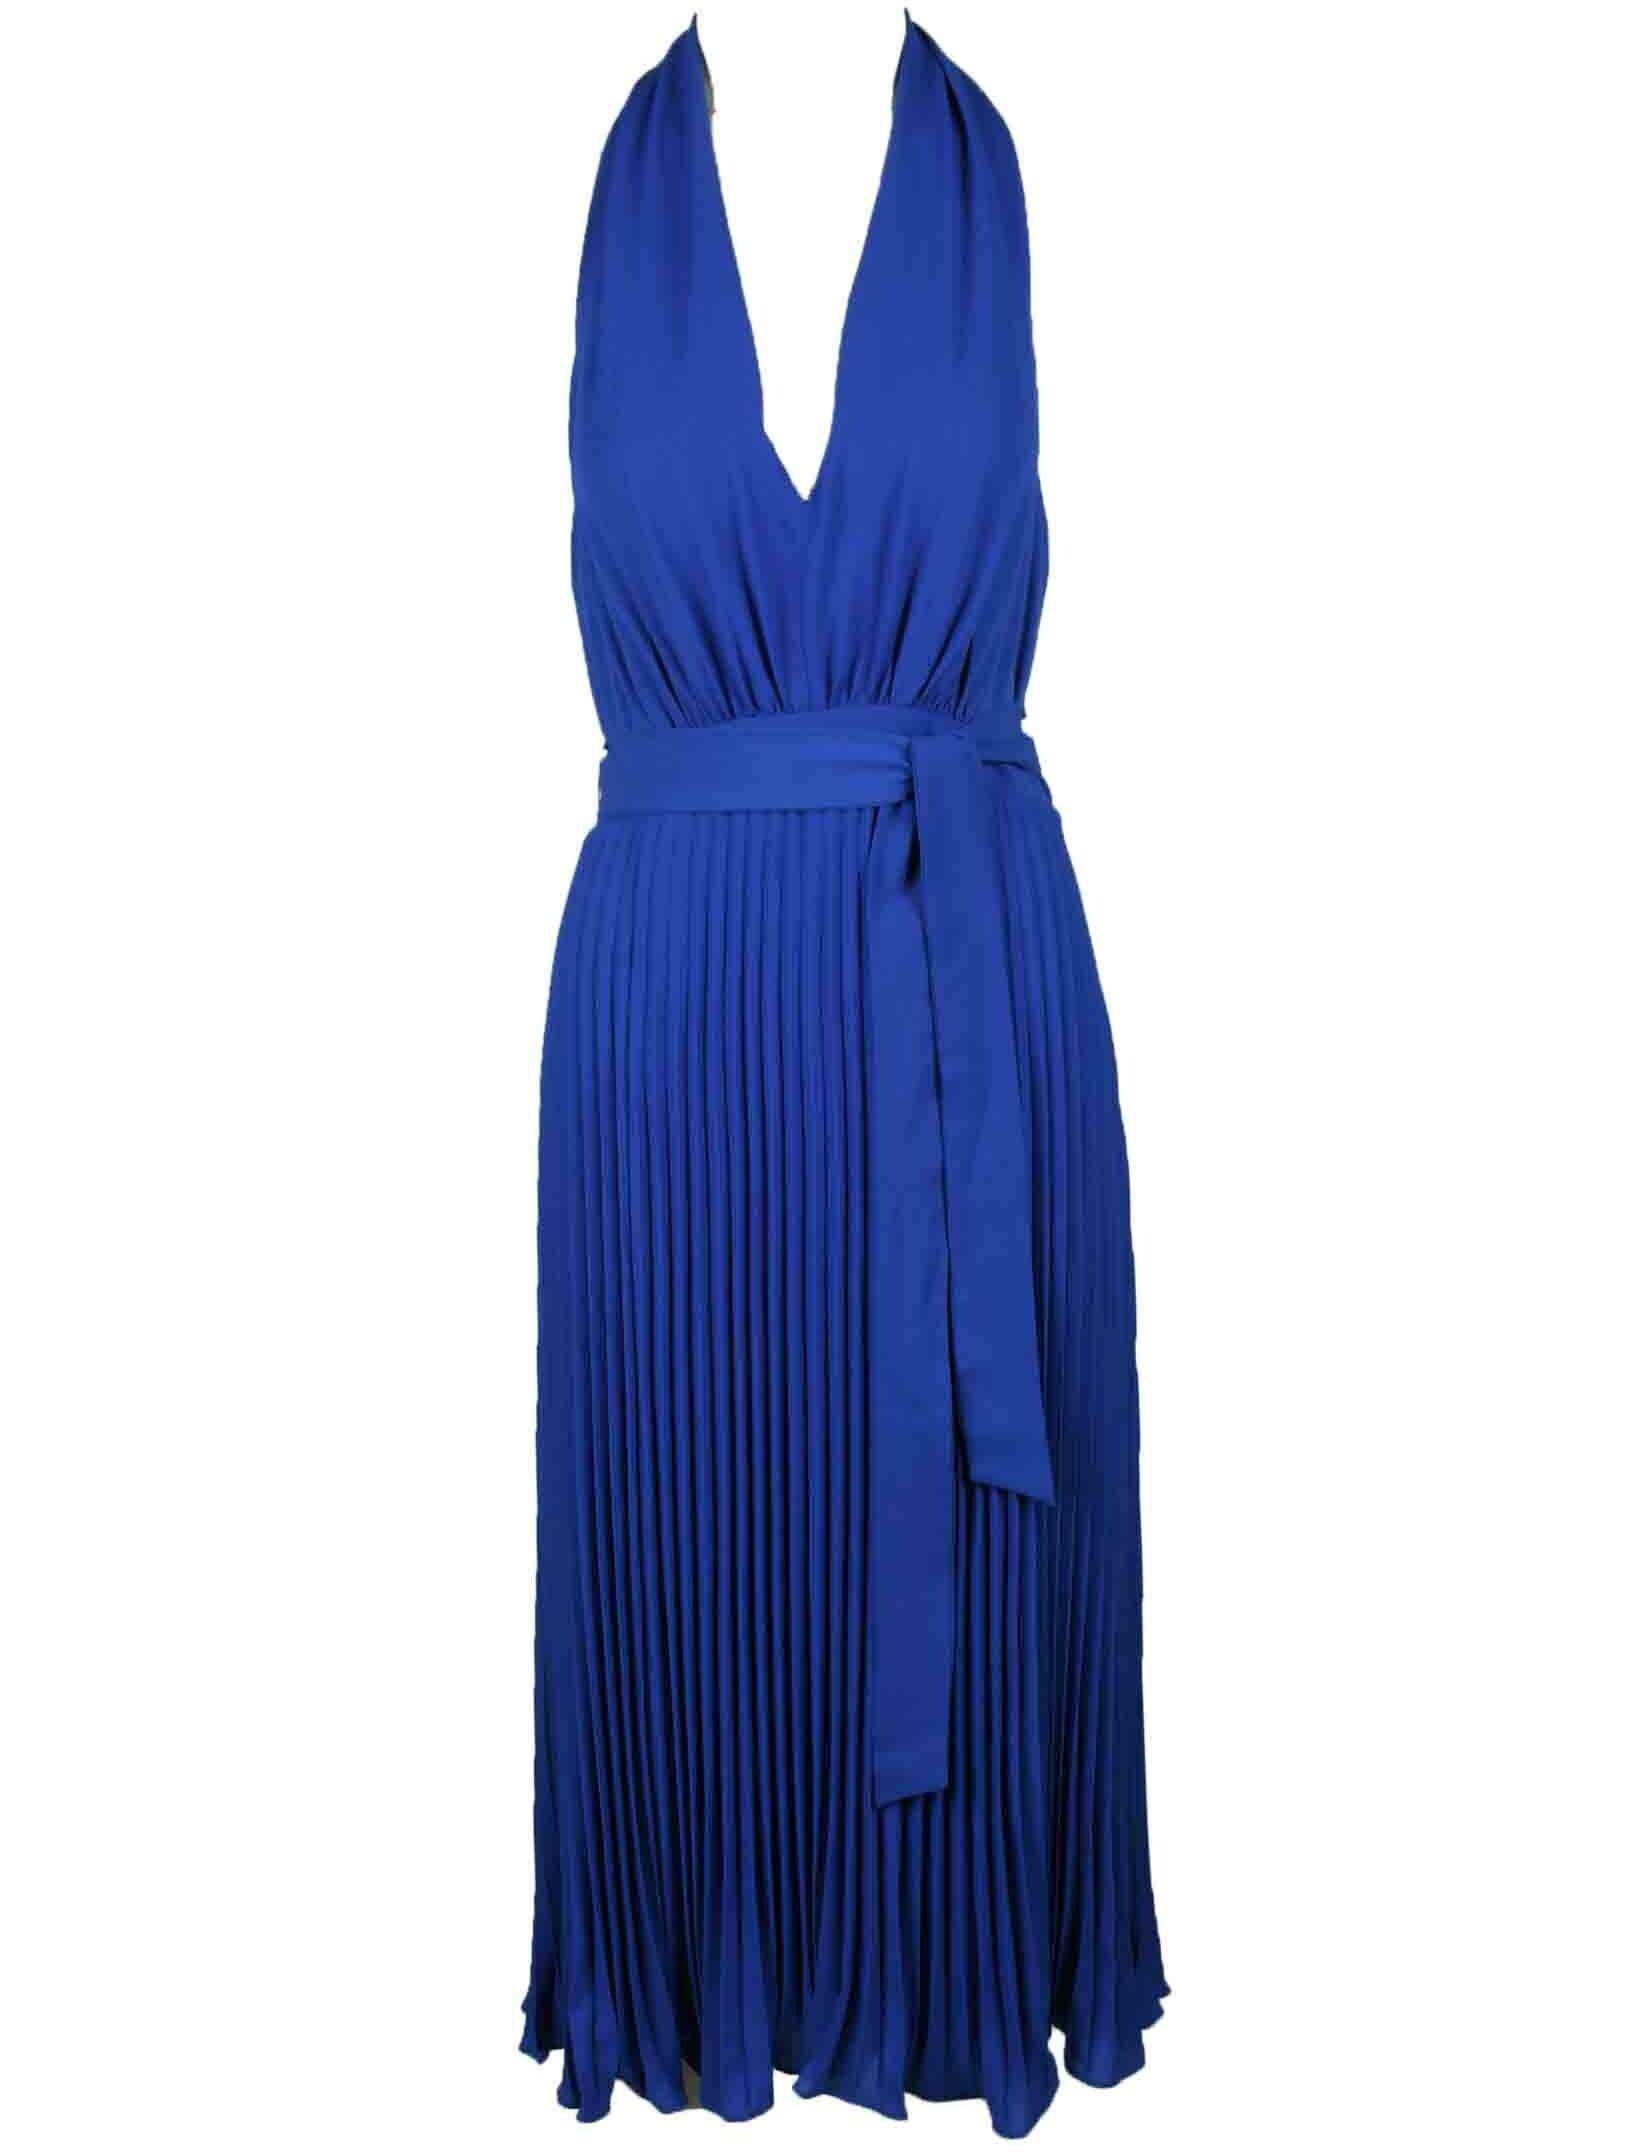 Guess Women's Bluette Dress 38 IT at